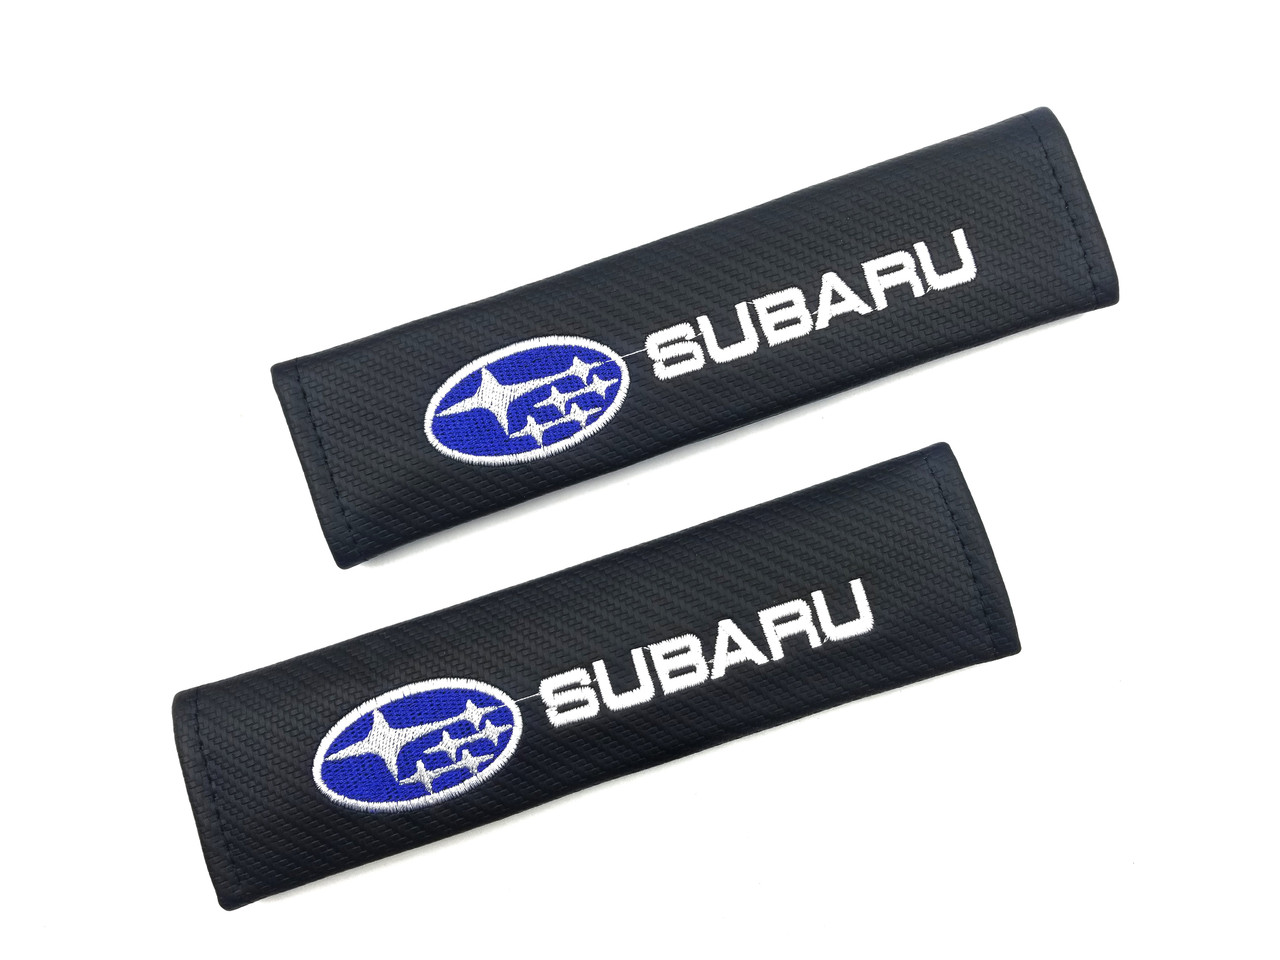 Carbon Fiber Seat Belt Shoulder Pads Cover - Subie Stars / White